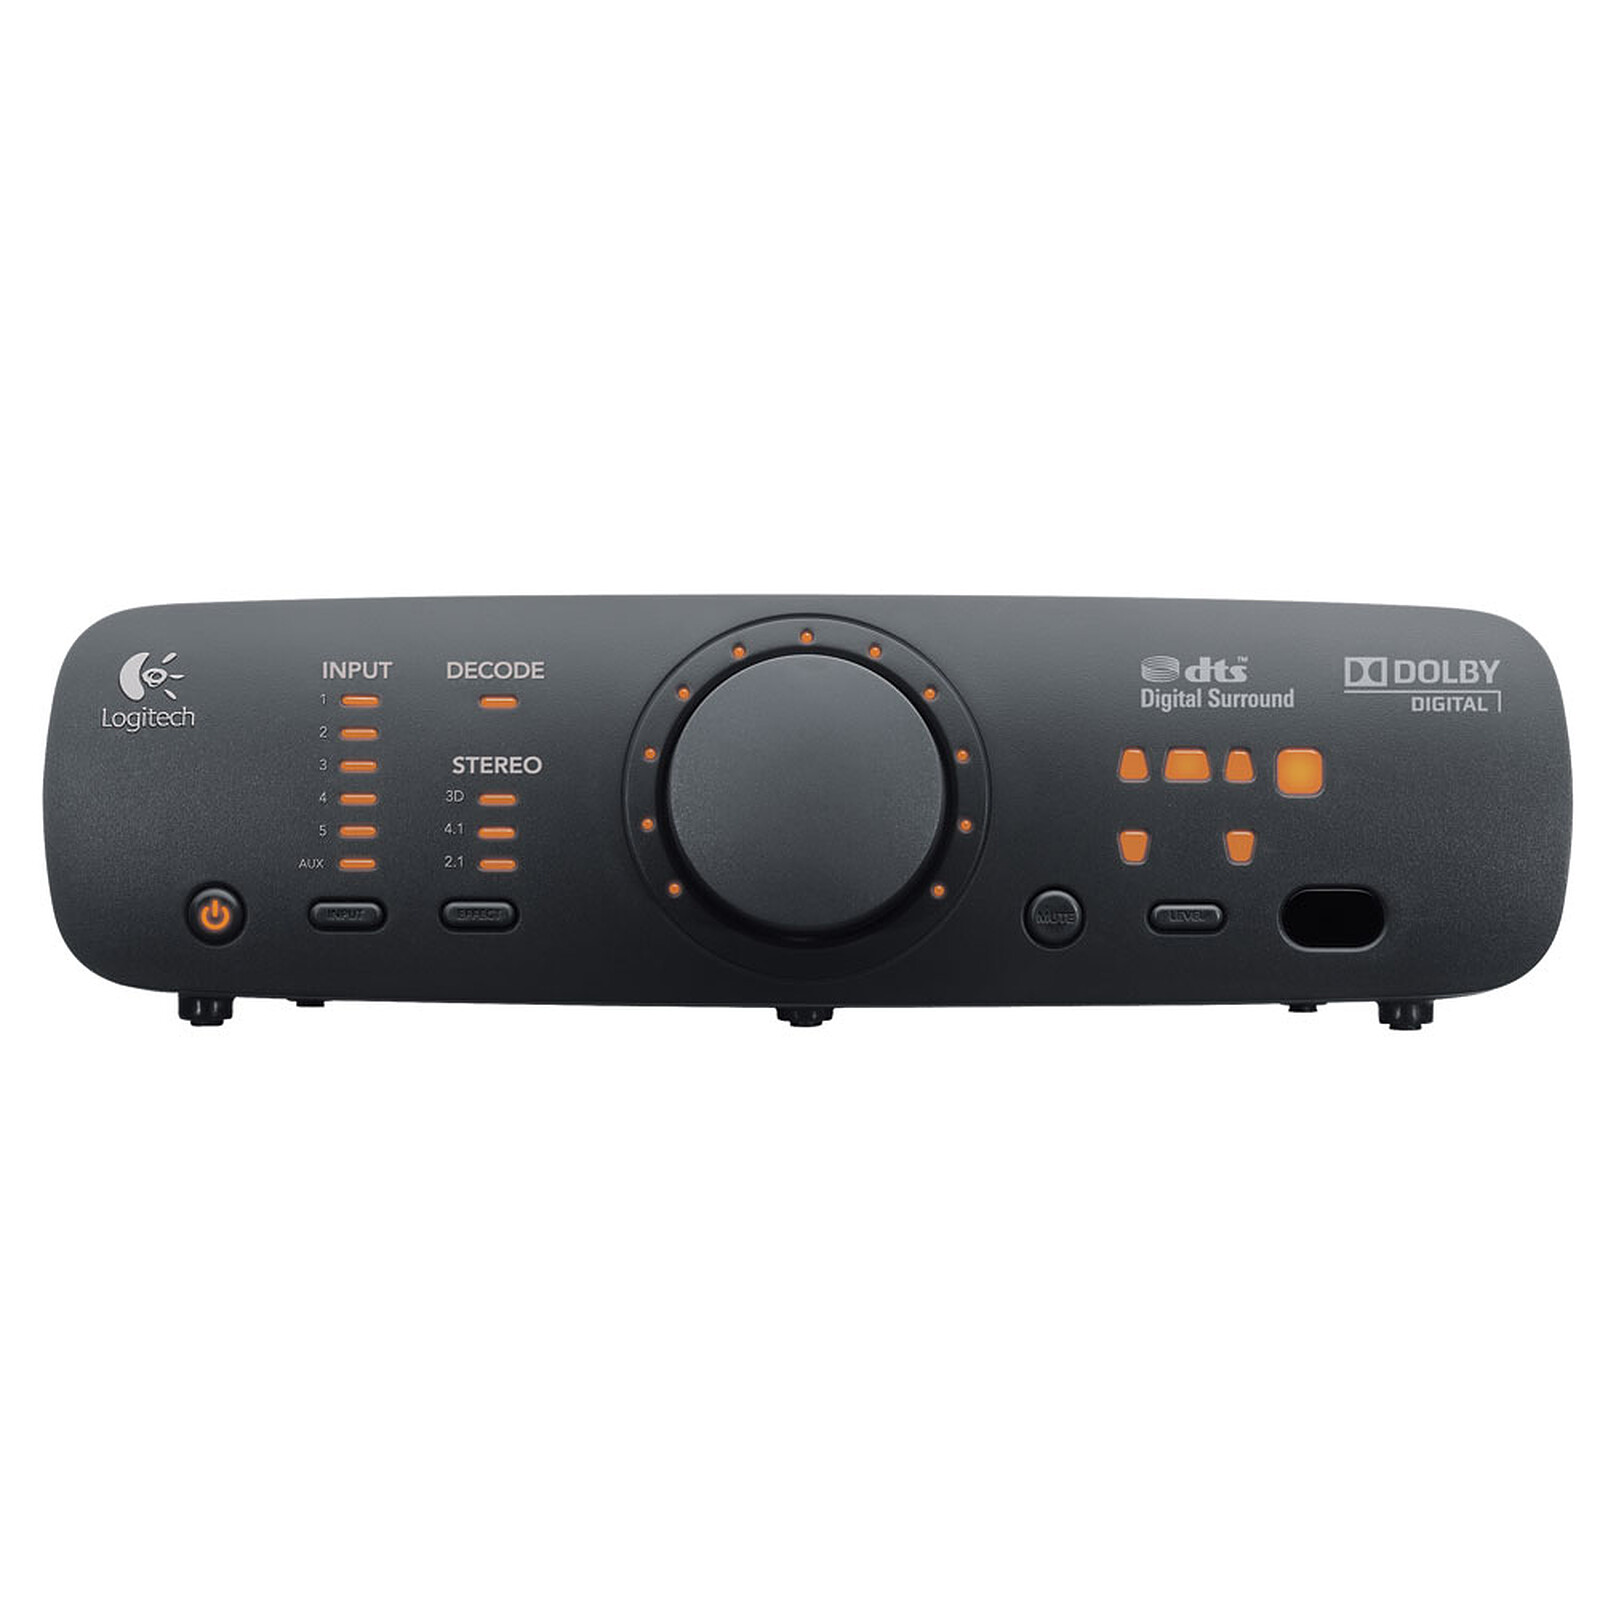 Logitech Speaker System Z623 - Altavoces PC - LDLC